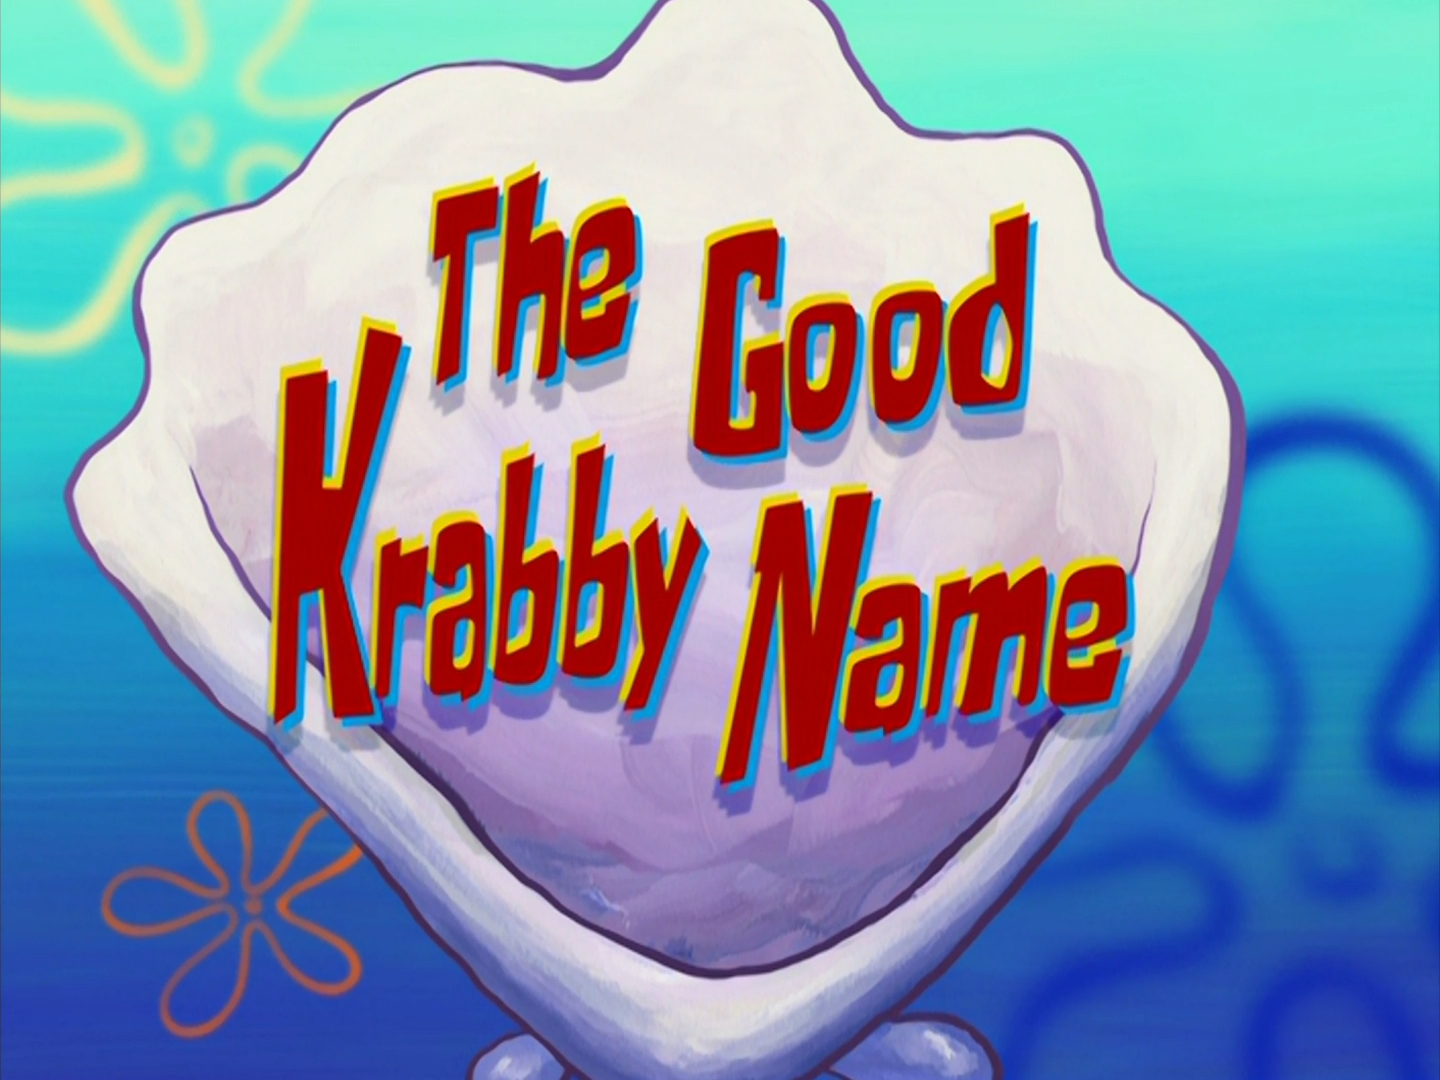 The Good Krabby Name.